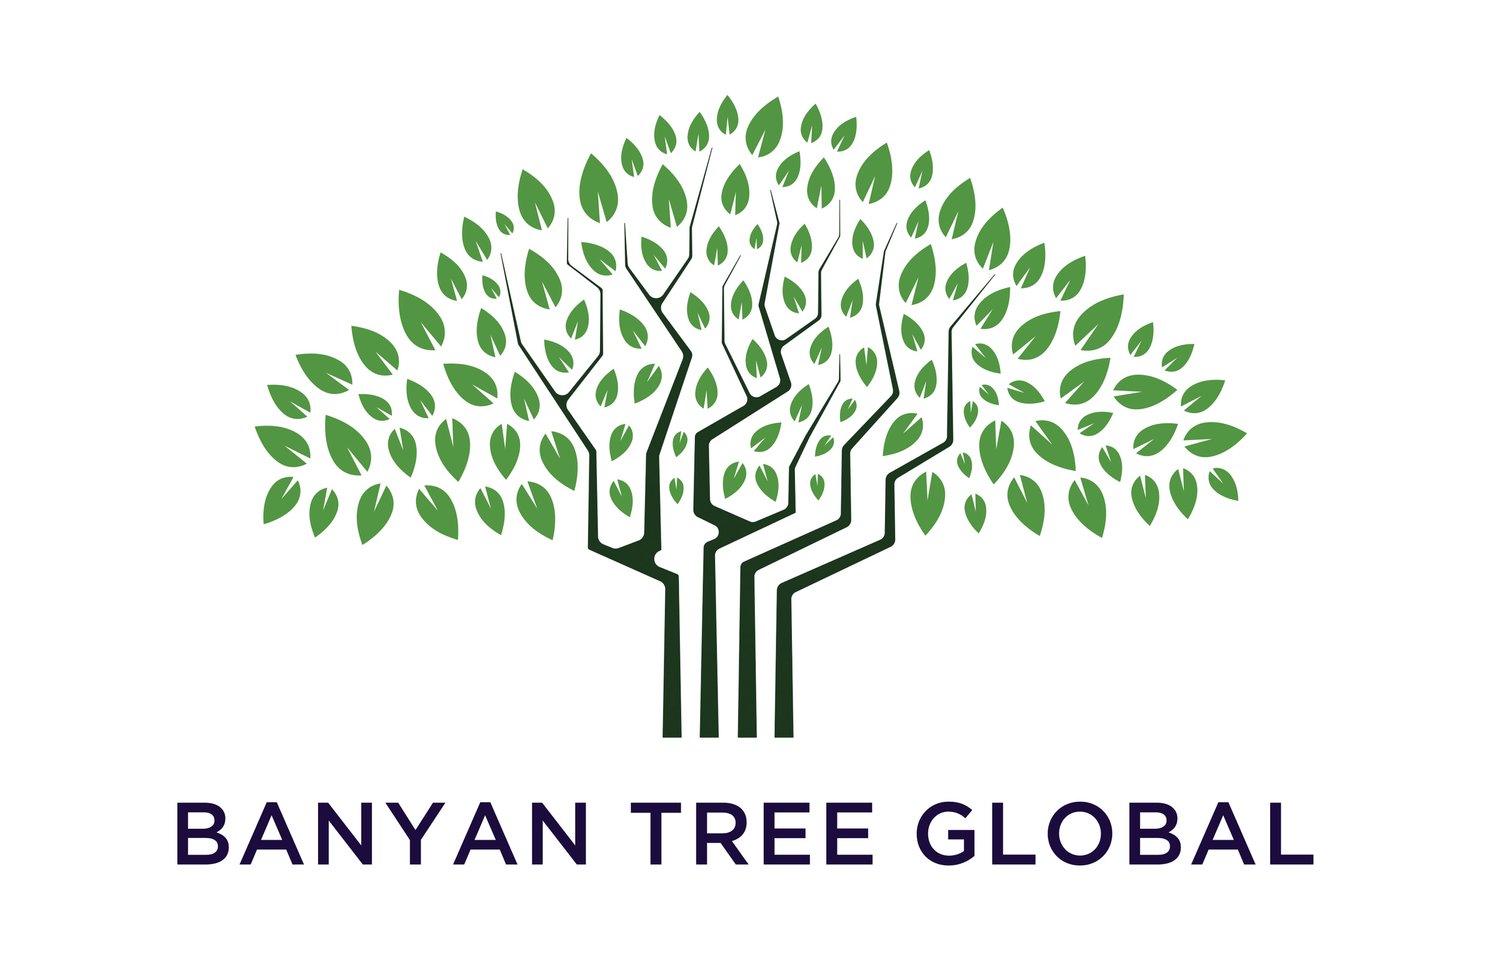 BANYAN TREE GLOBAL